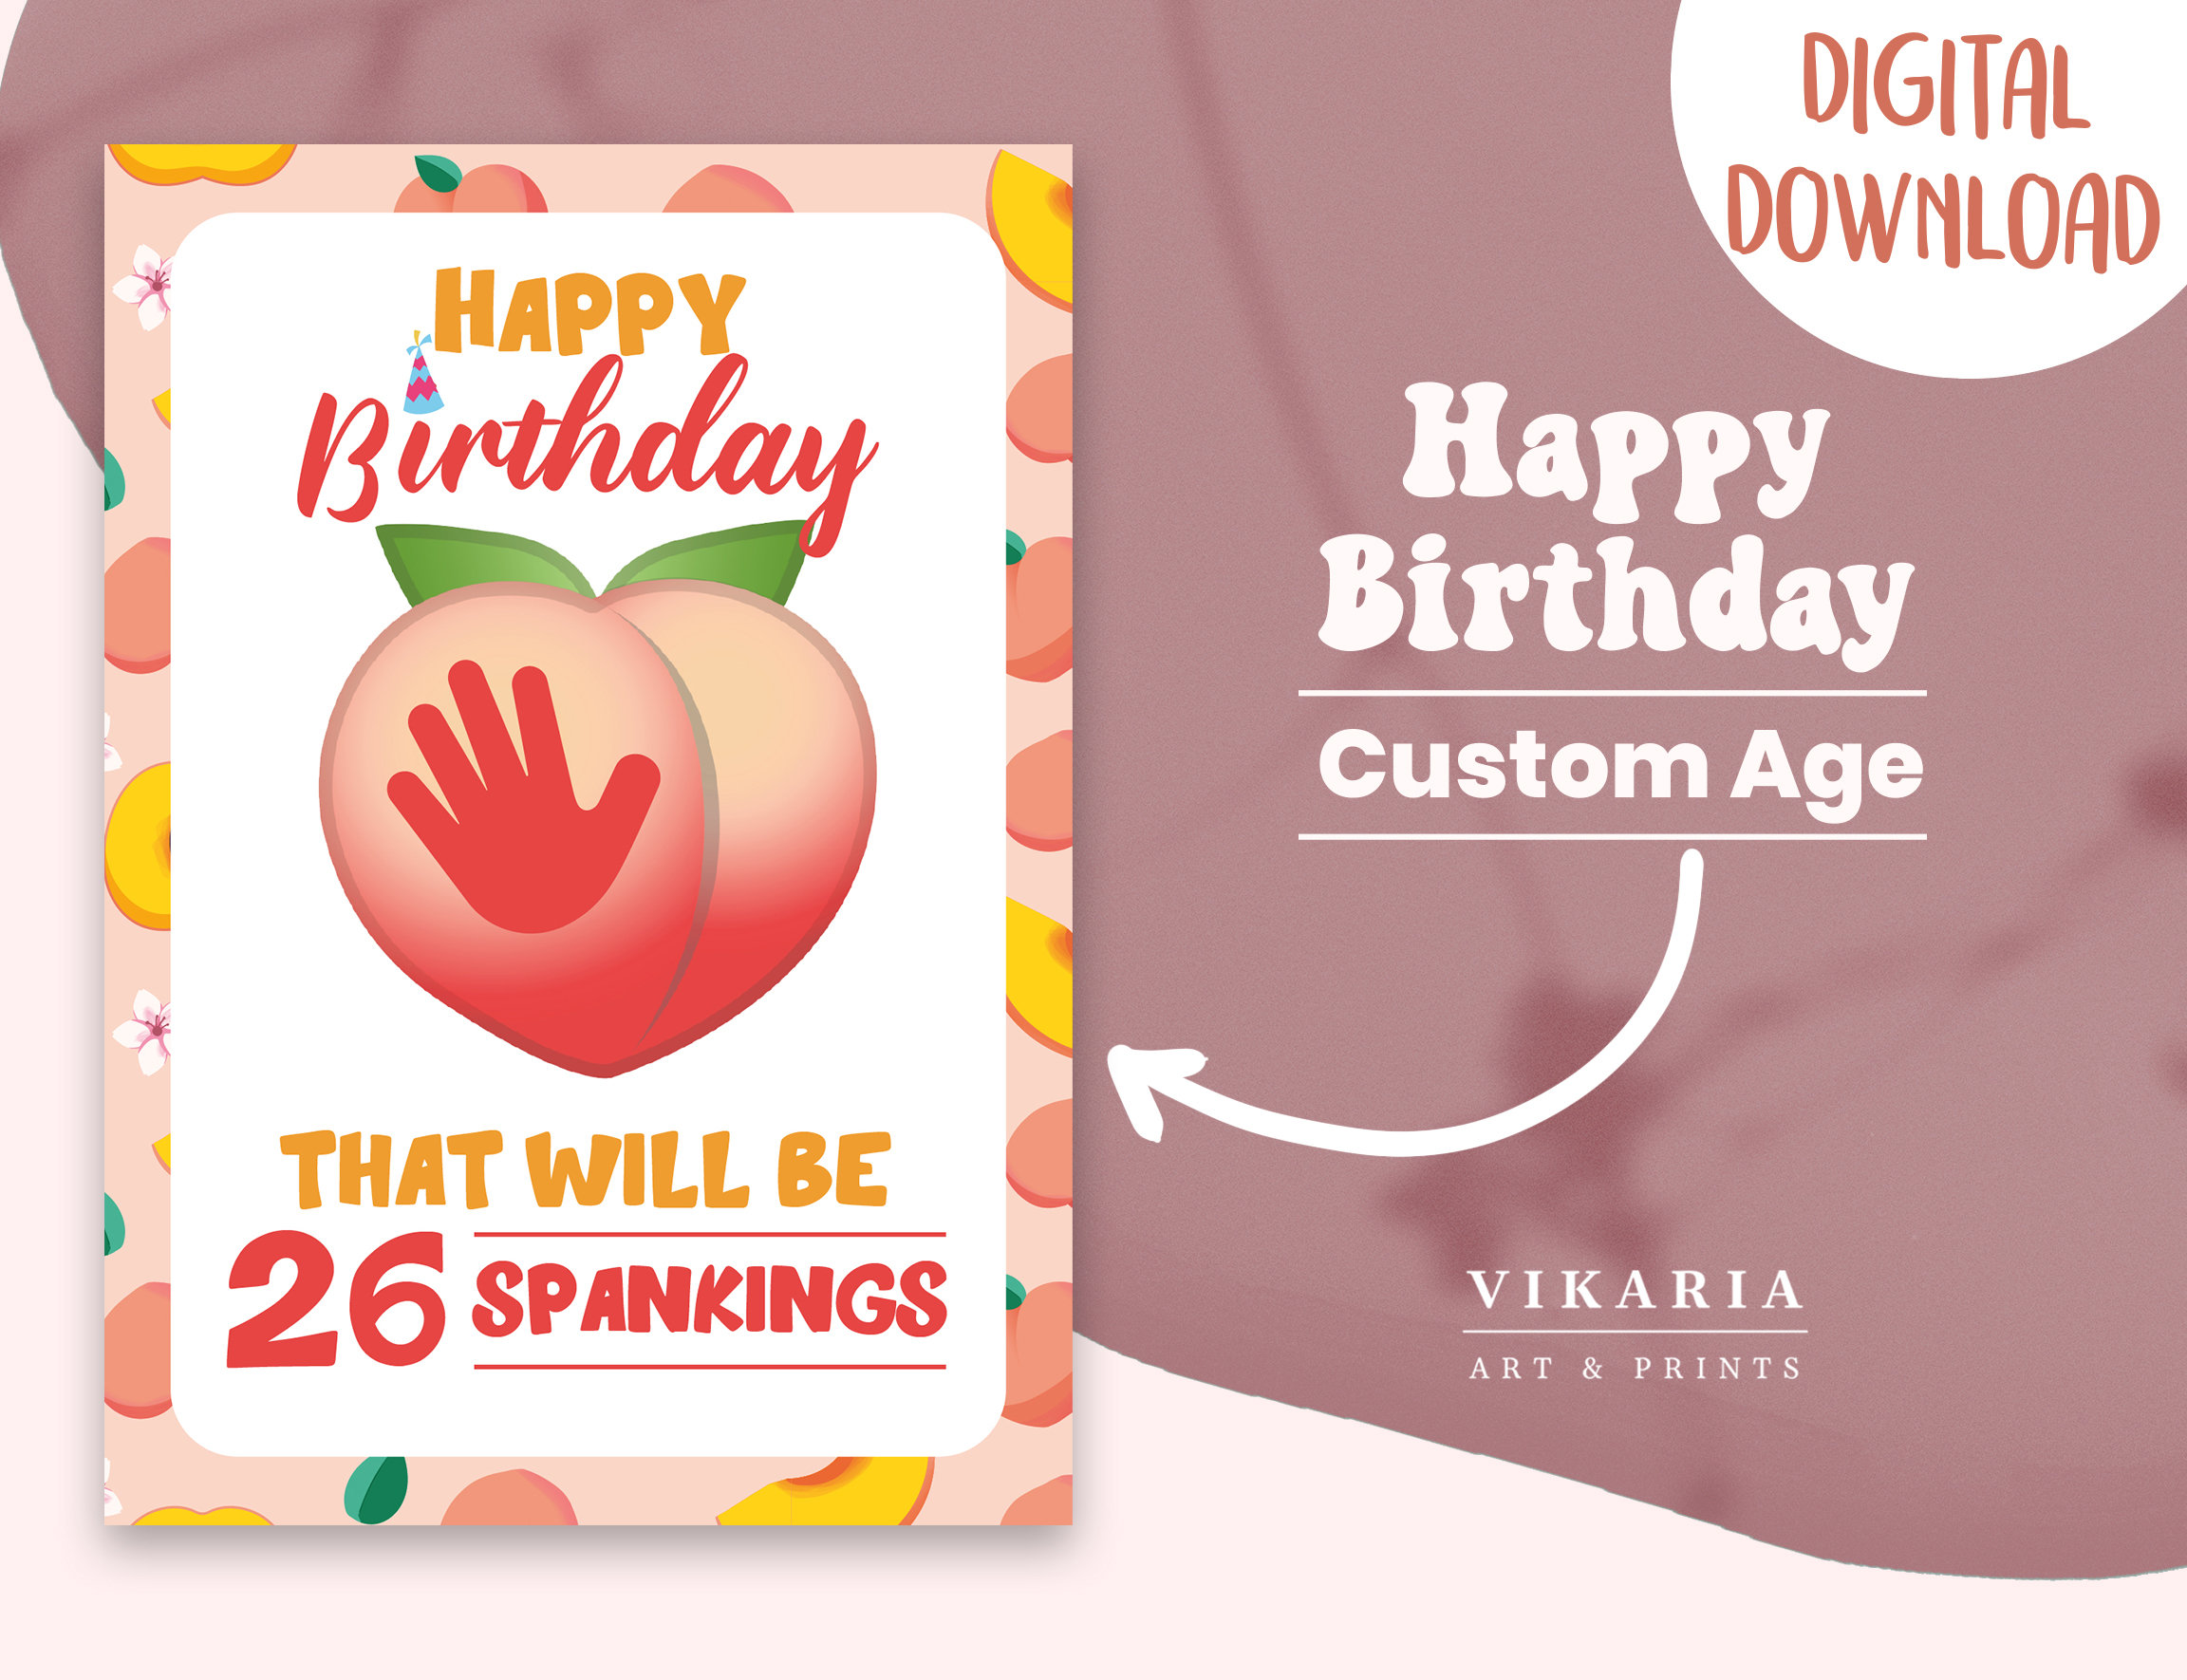 Funny Spanking Birthday Card Custom Age Sexy Happy Birthday image image pic